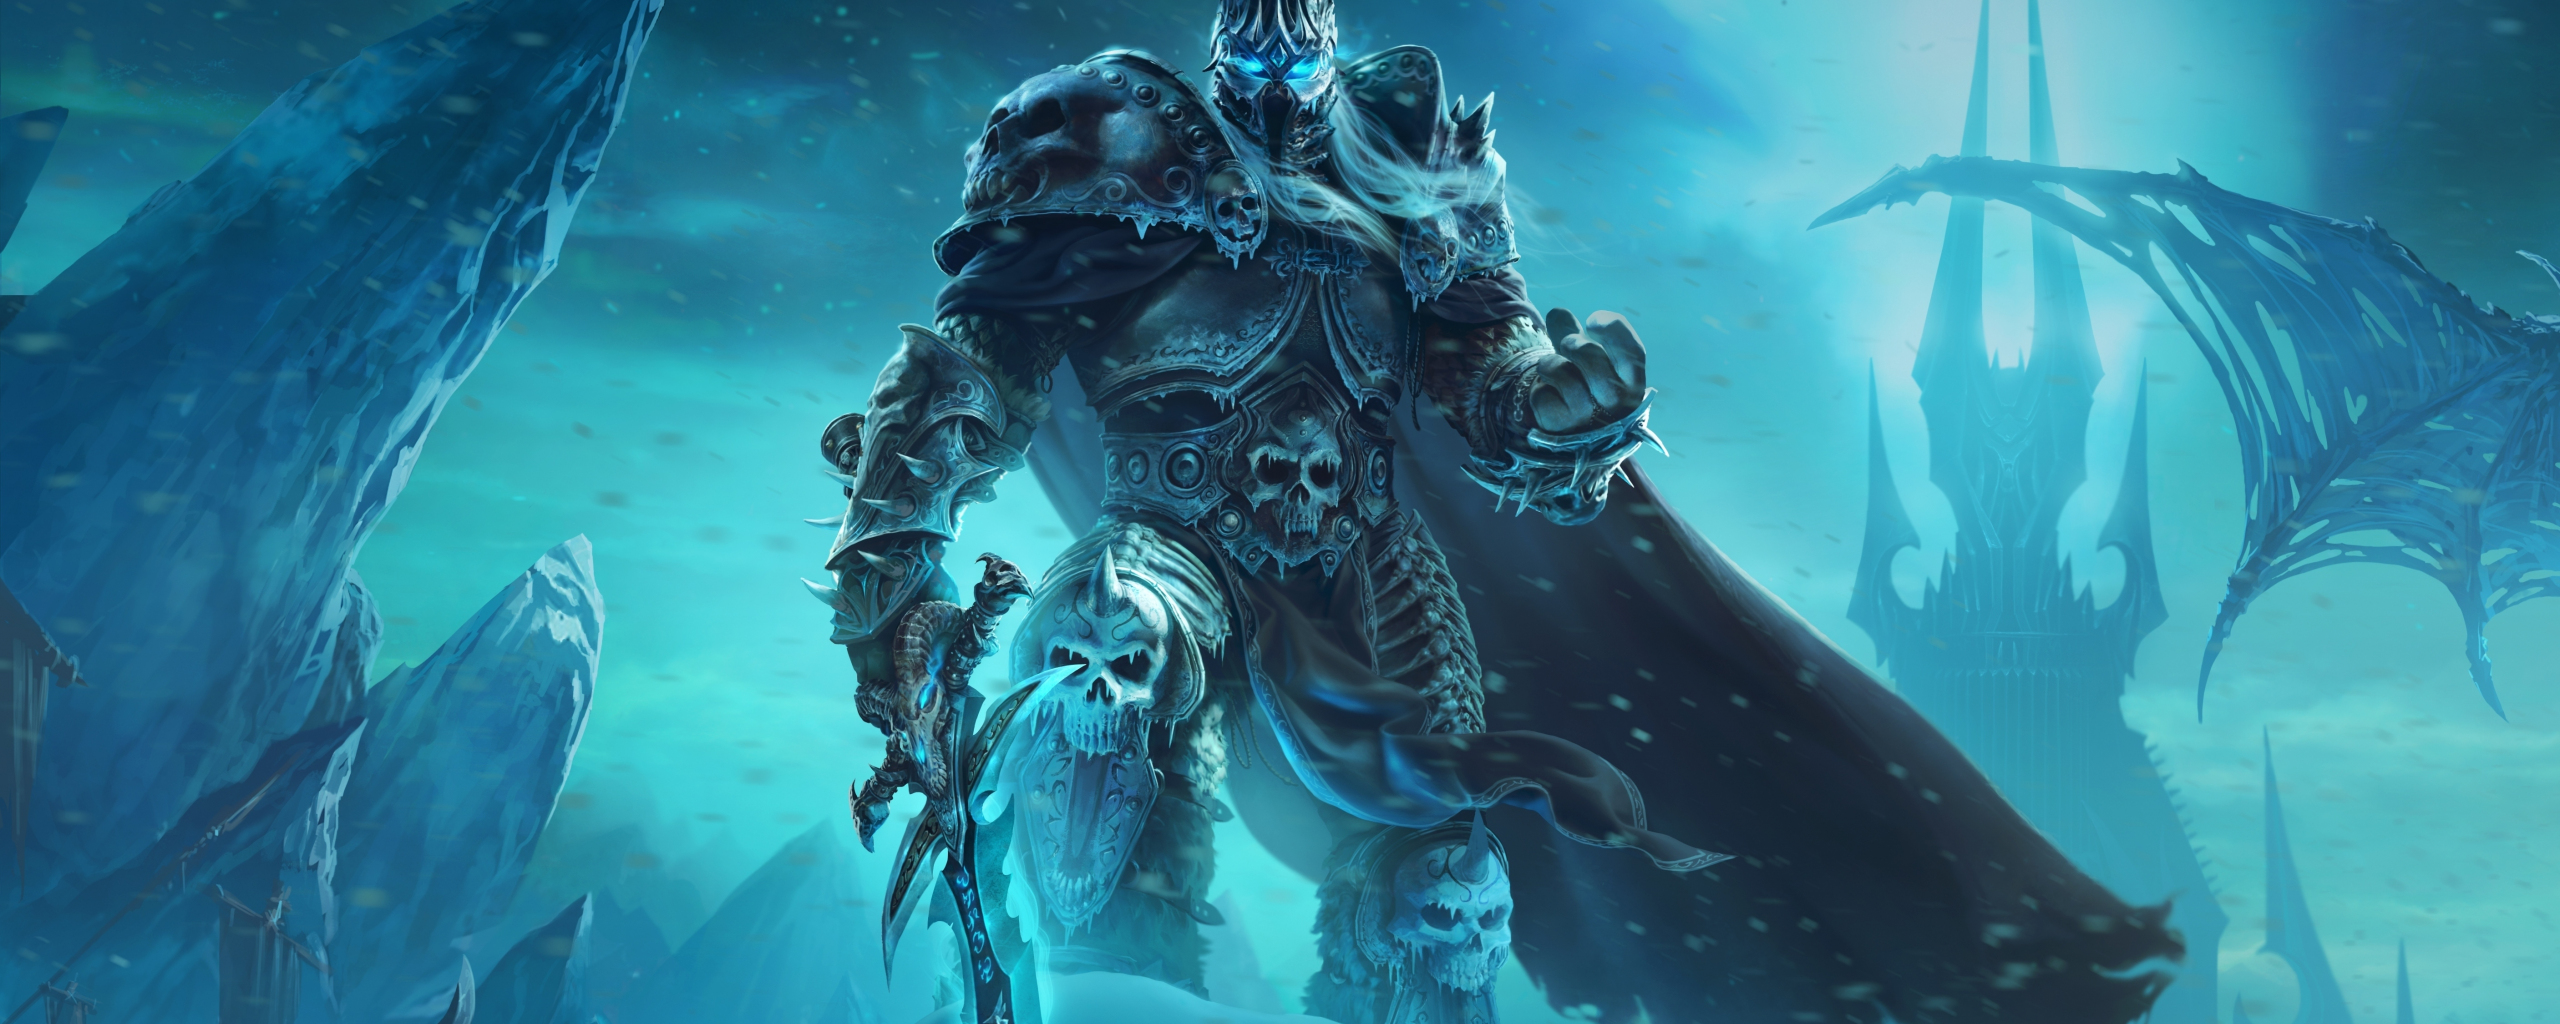 Dark King, World of Warcraft: Wrath of the Lich King, online game, 2560x1024 wallpaper